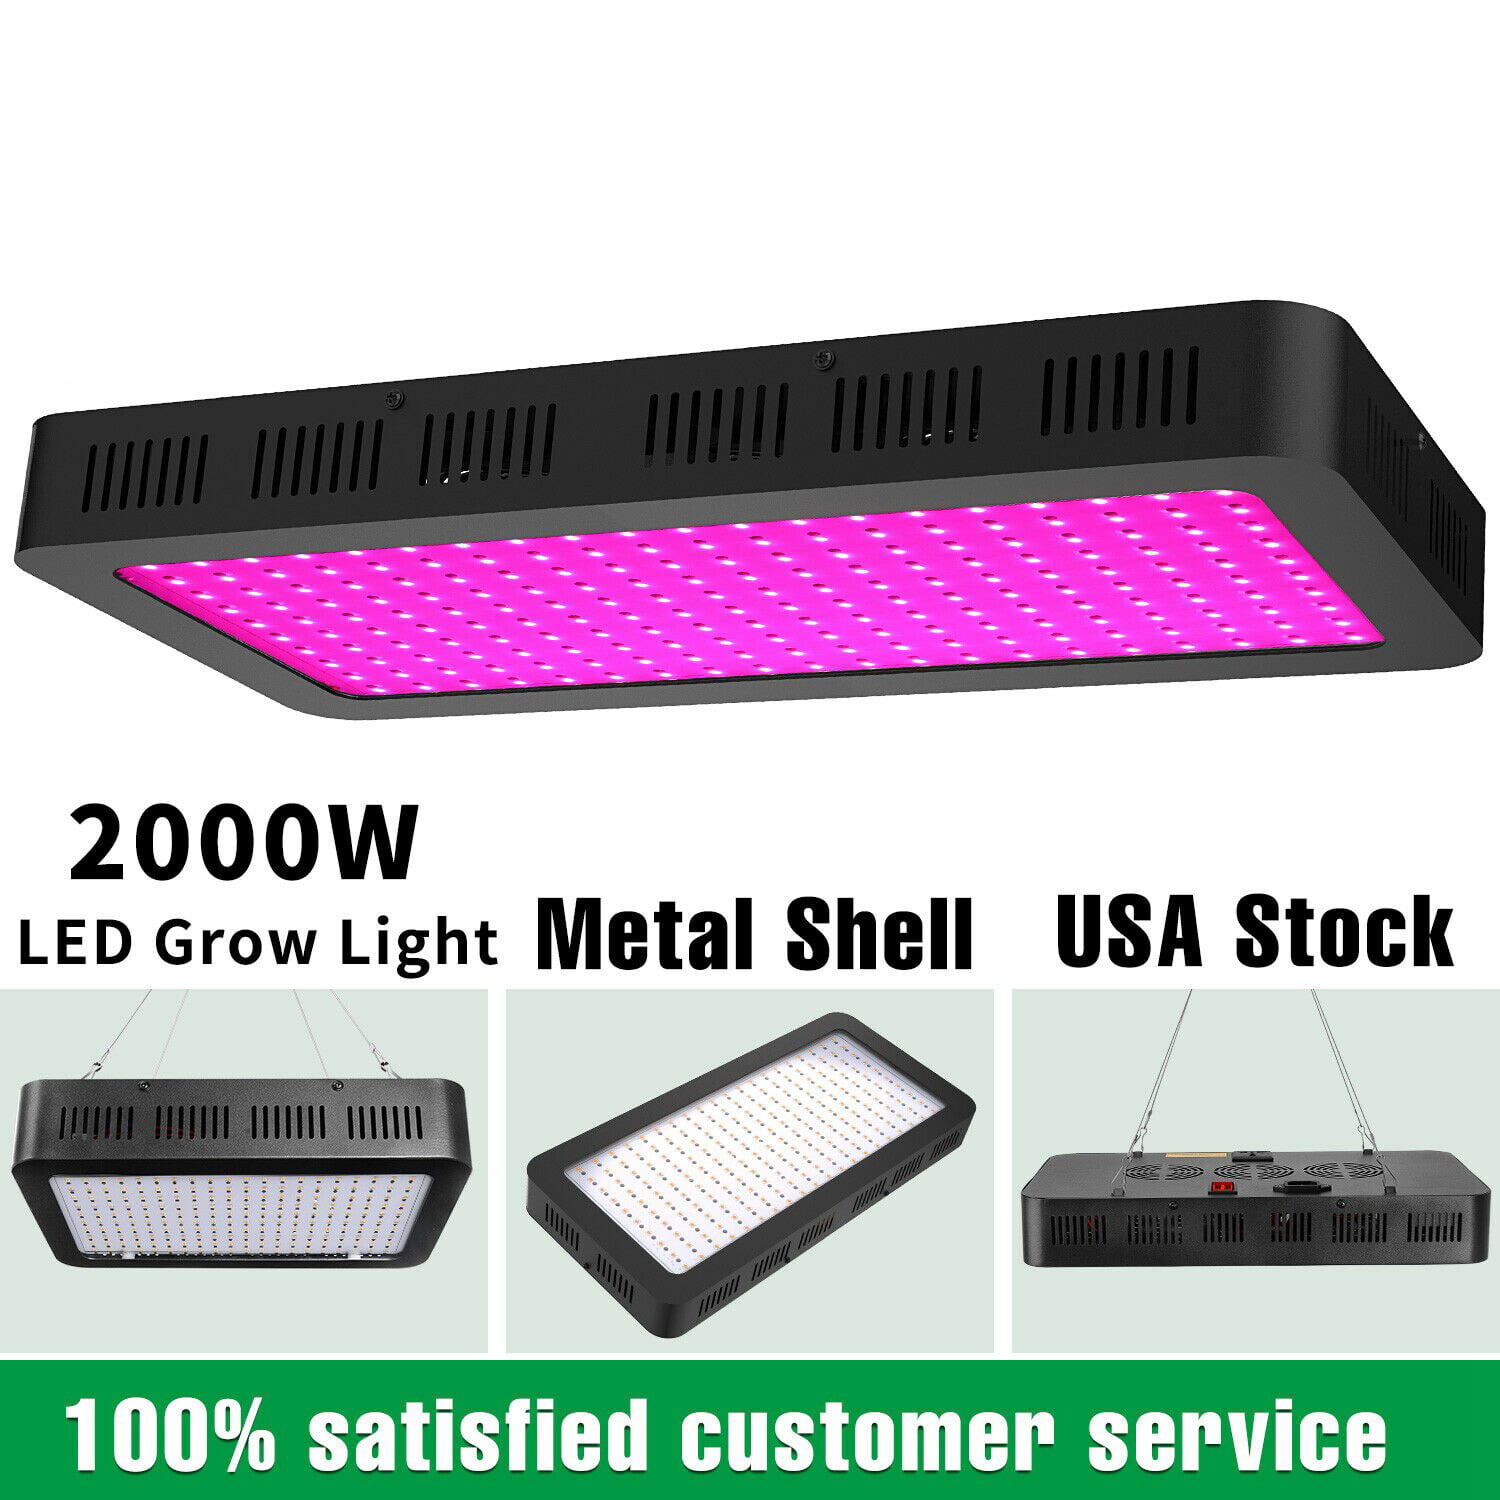 Details about   2000W LED Grow Lights Panel Lamp UV IR Full spectrum Hydroponic Plant Veg Flower 